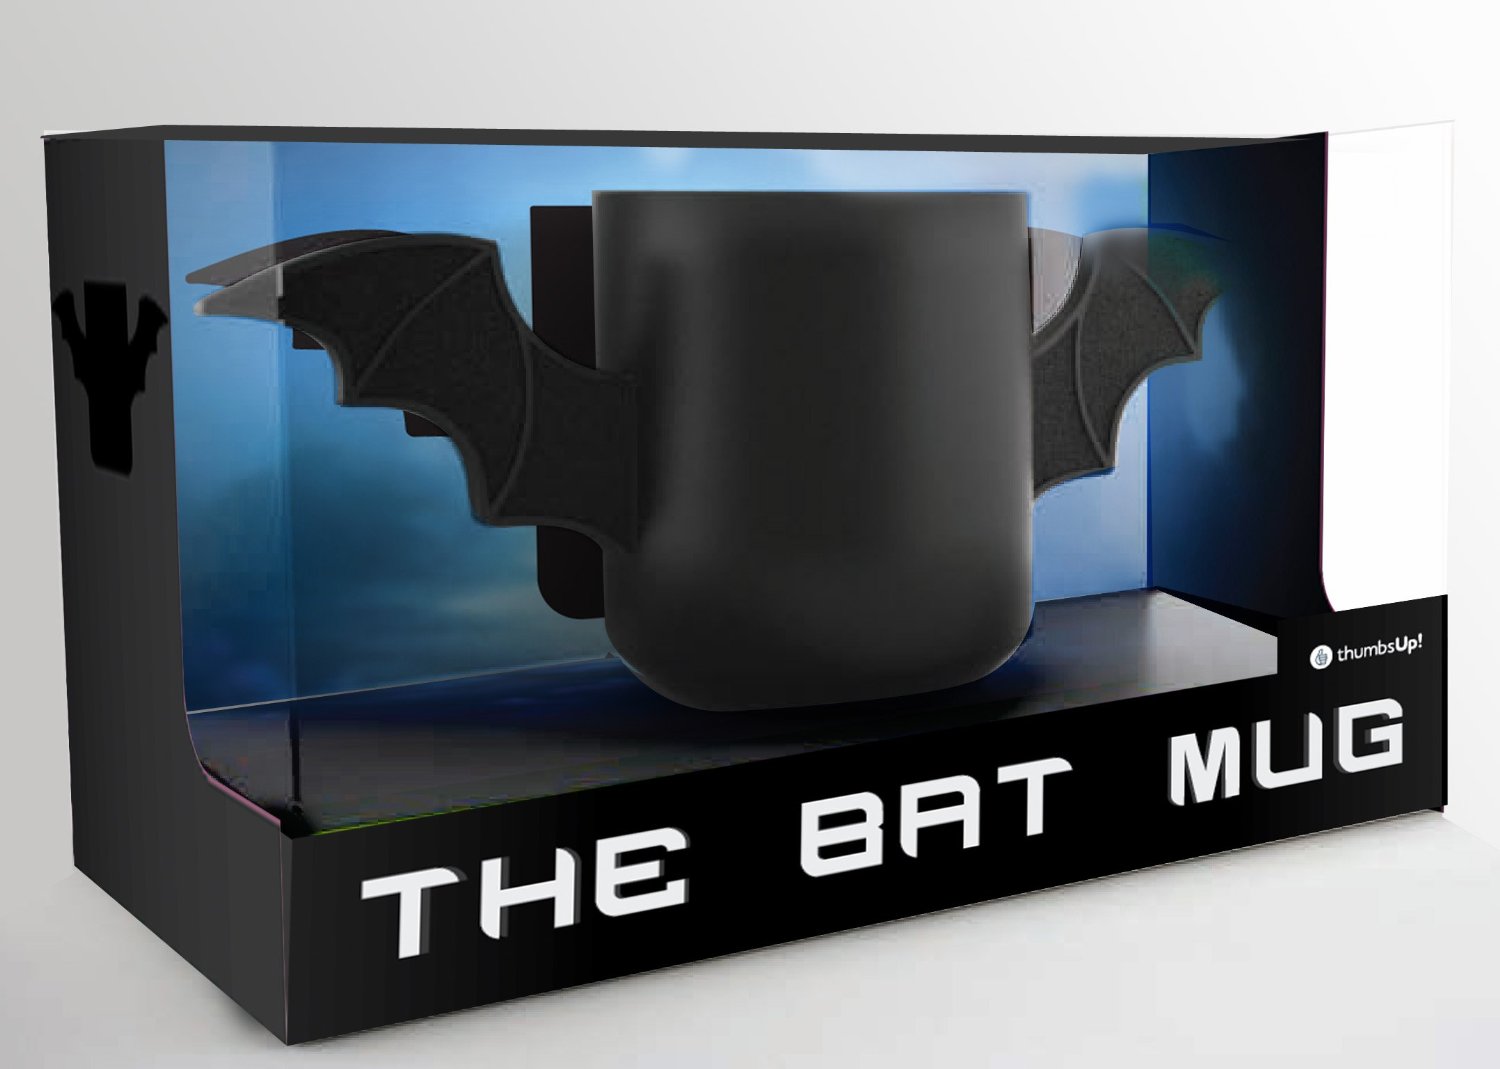 Batman tasse Flügel logo